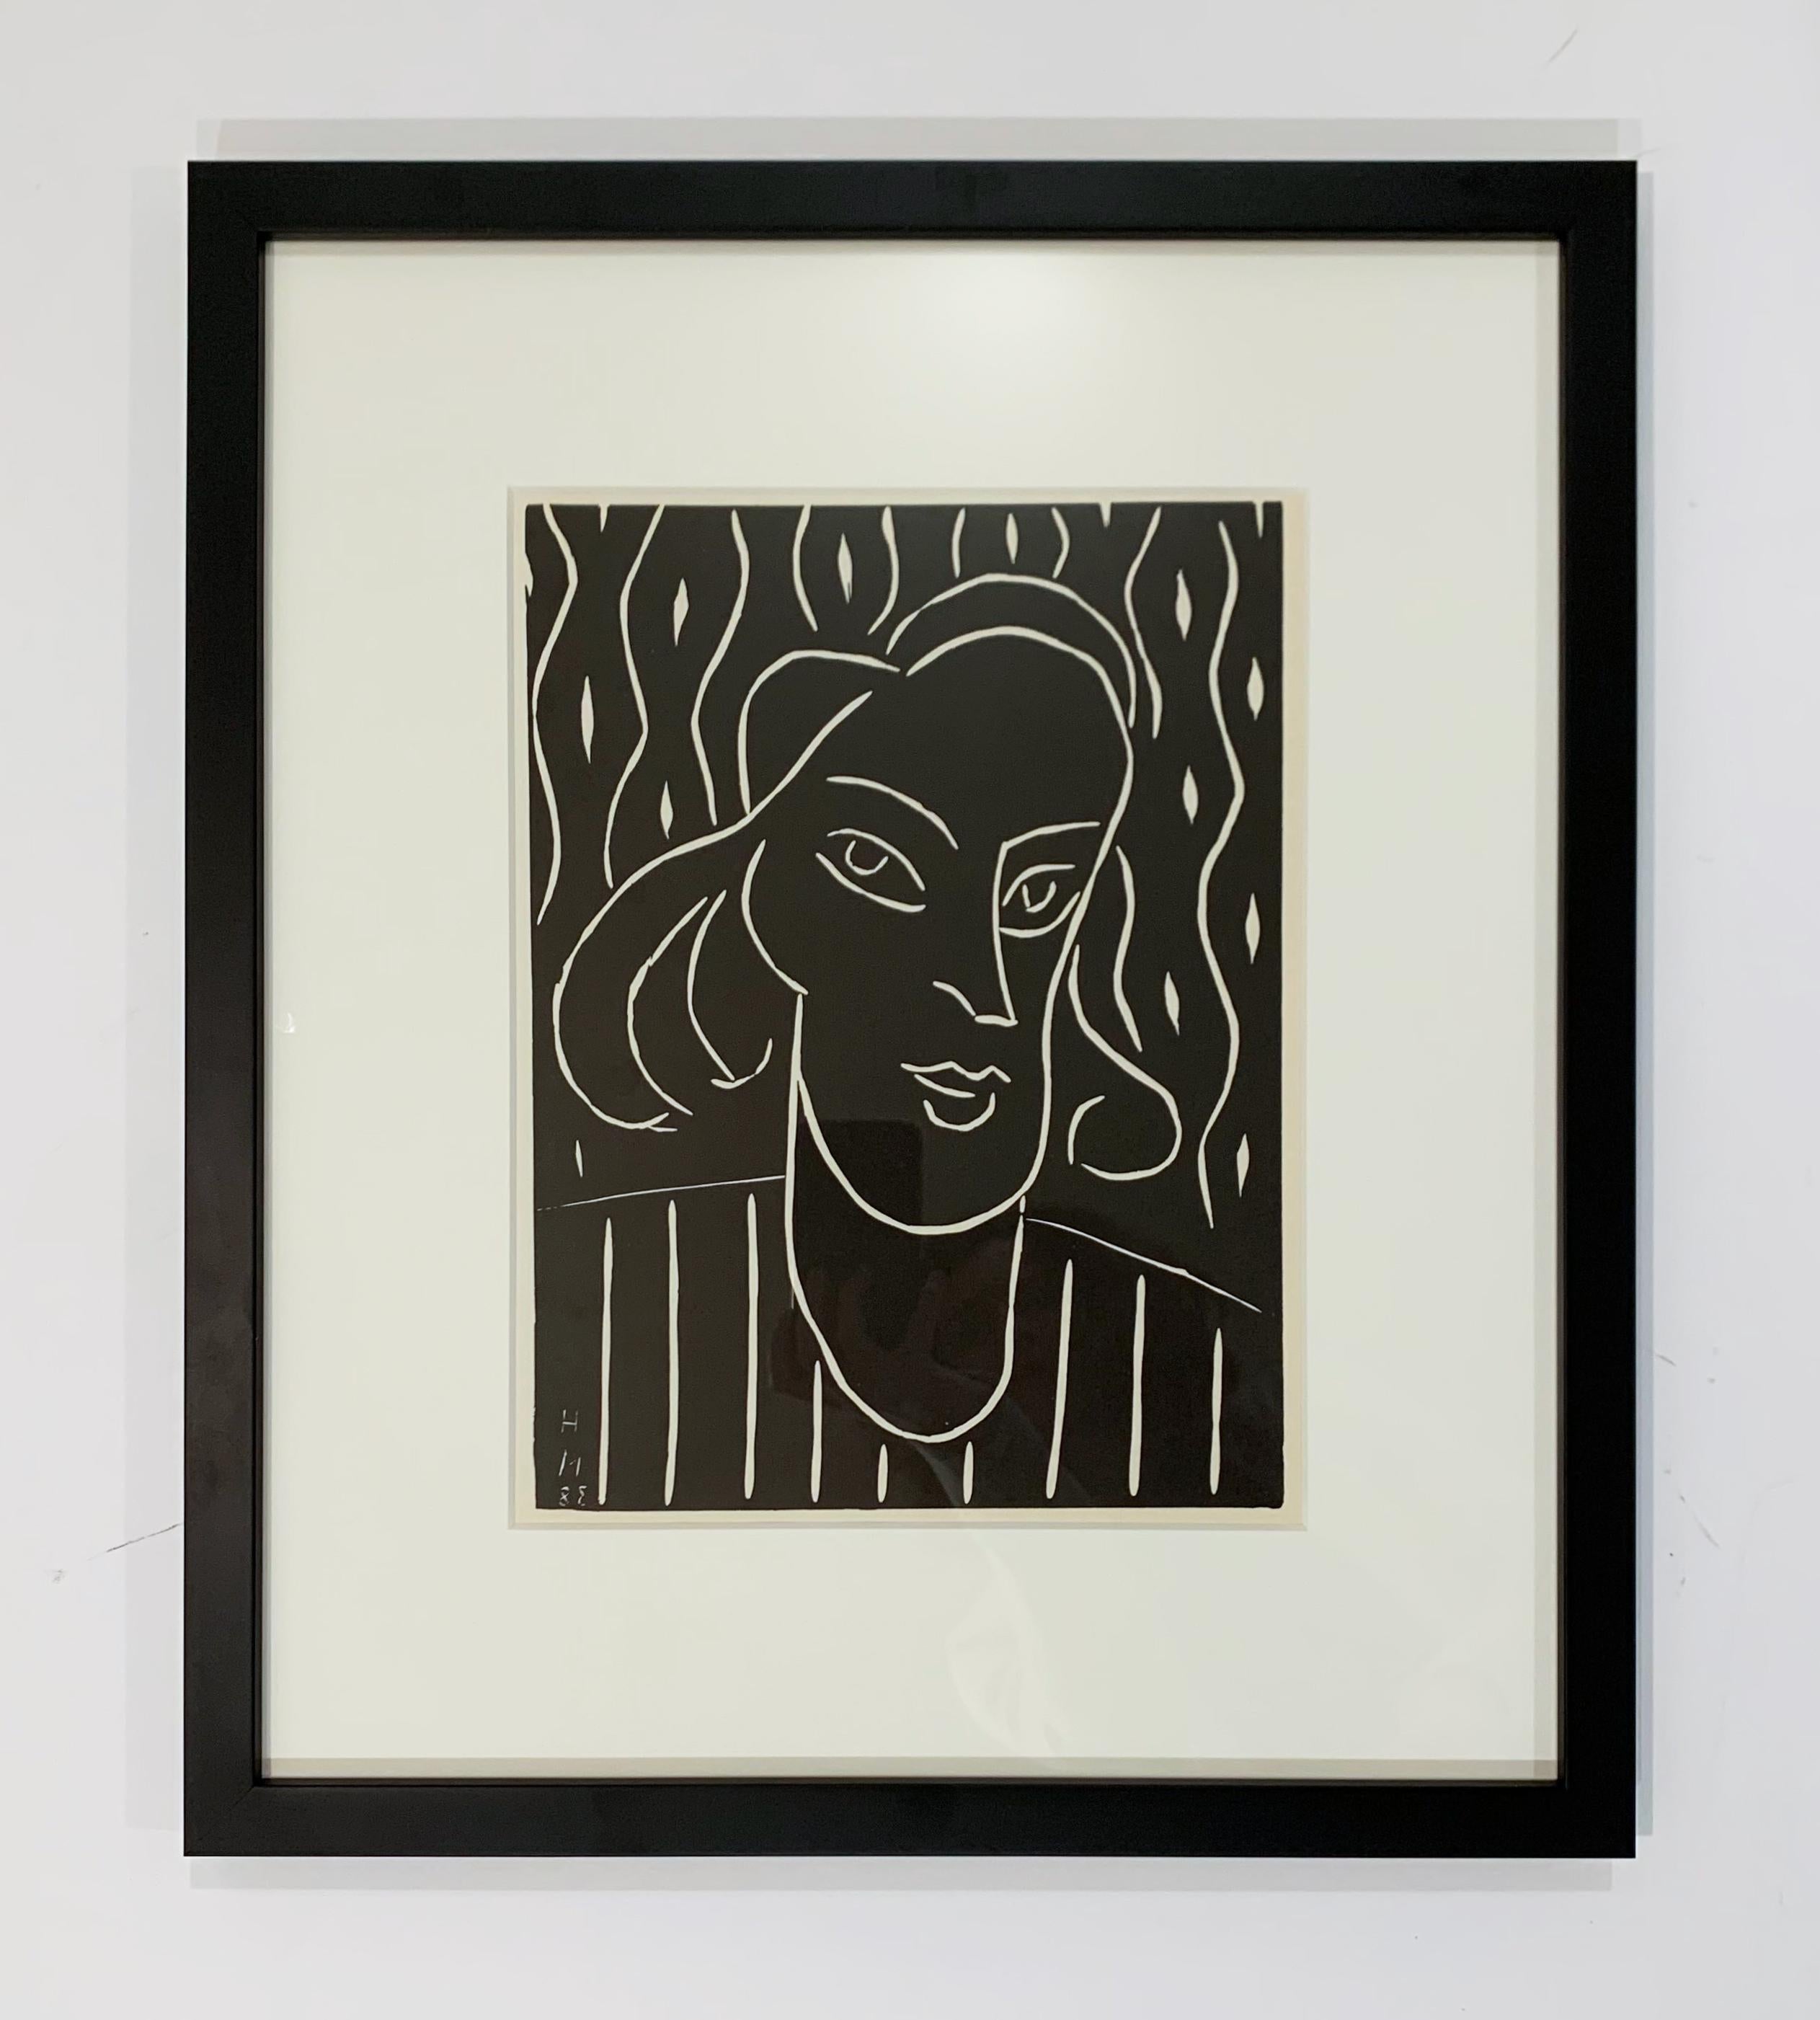 Artist: Henri Matisse
Title: Teeny
Portfolio: Other Portfolios
Medium: Linocut
Date: 1938
Edition: Unnumbered
Frame Size: 19